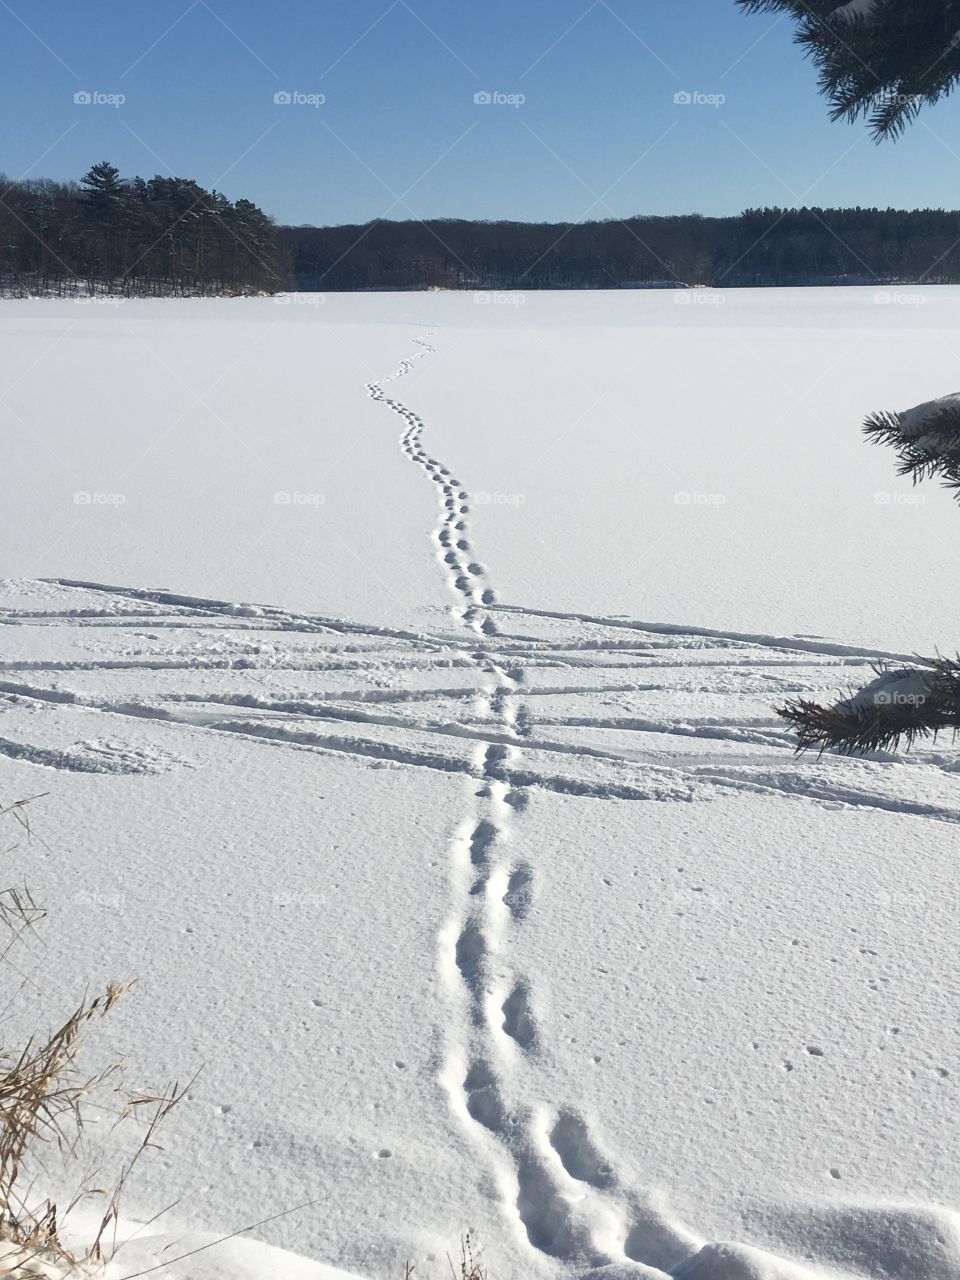 Footprint trail across a frozen lake